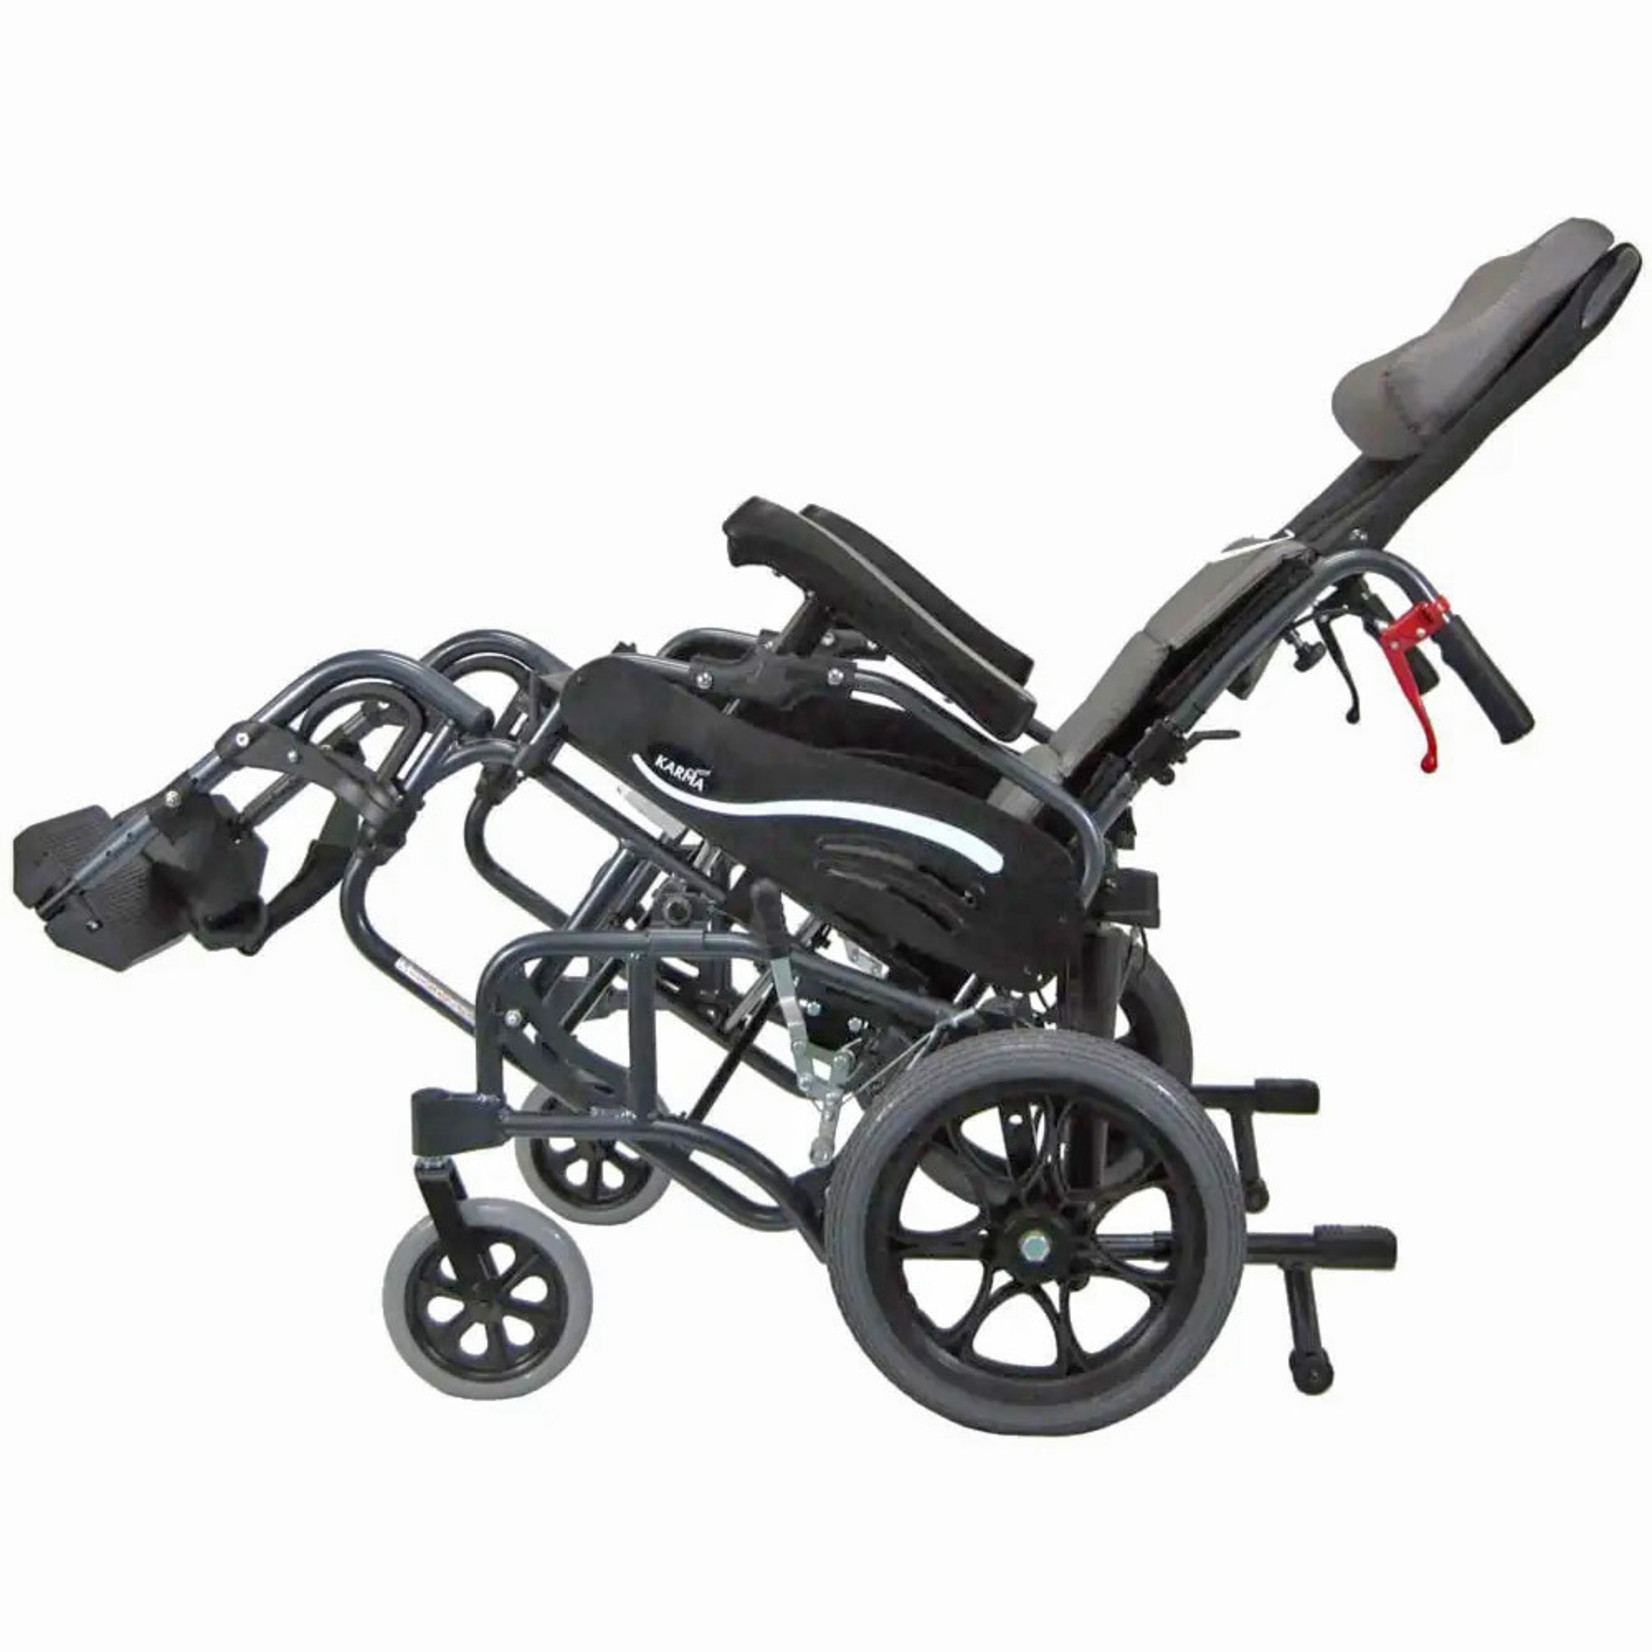 Karman VIP515 Tilt in Space Lightweight Transport Wheelchair